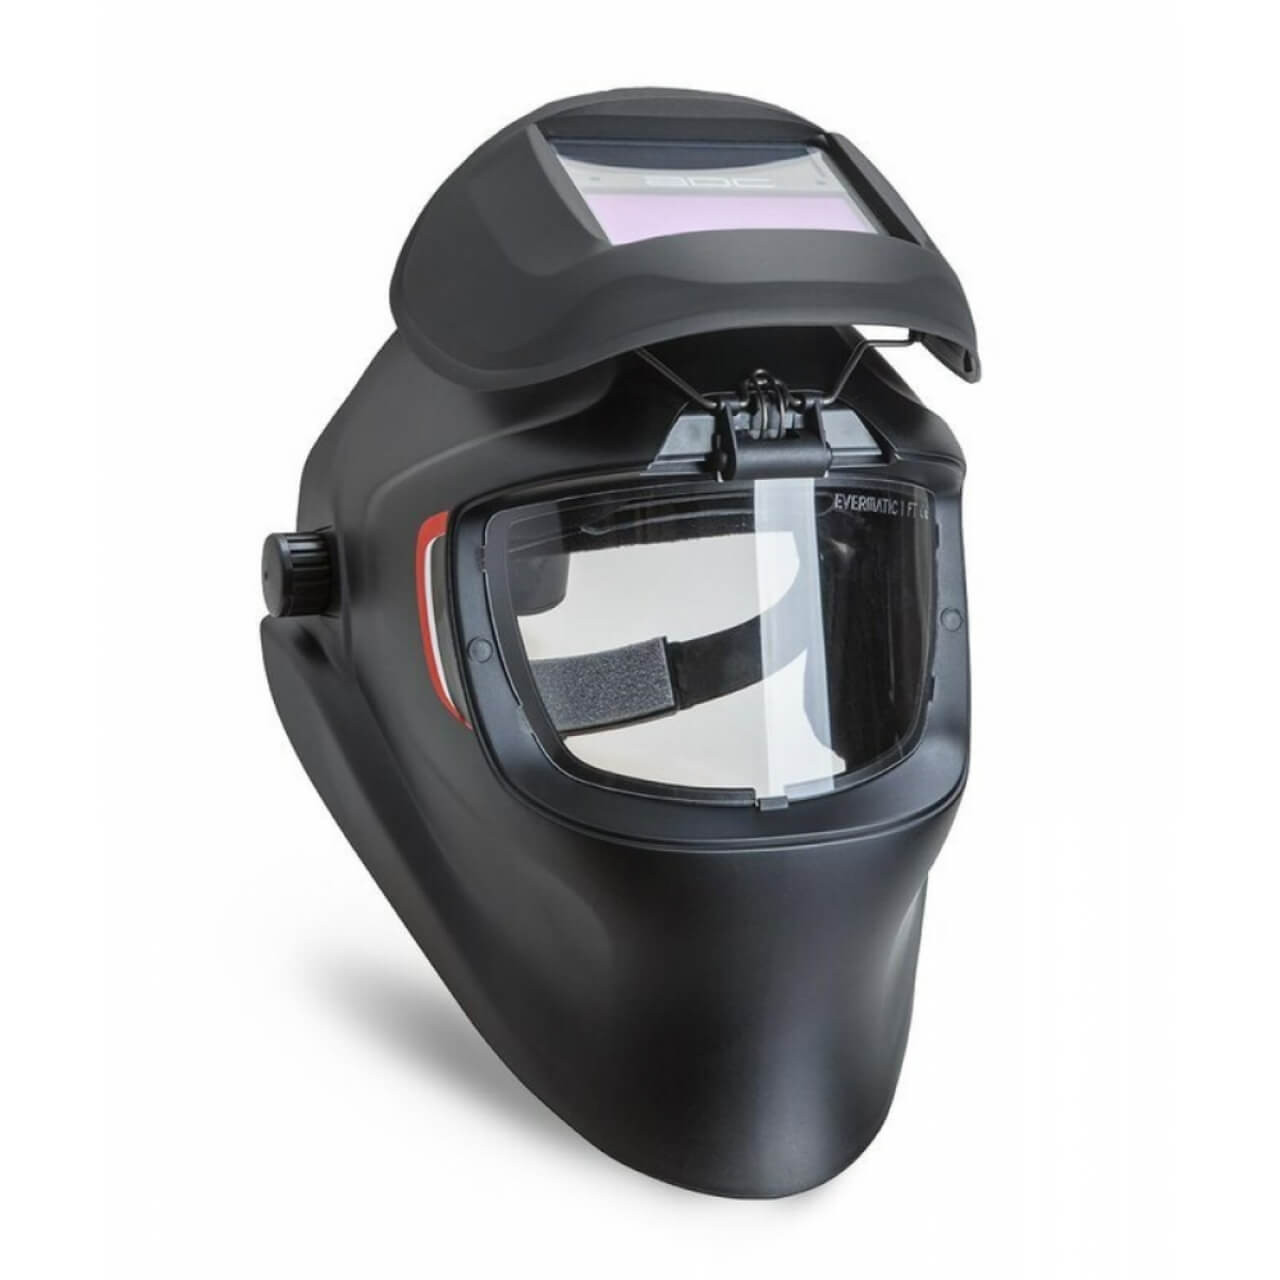 Cleanair Evolve Auto Welding Helmet & AerGO PAPR Kit